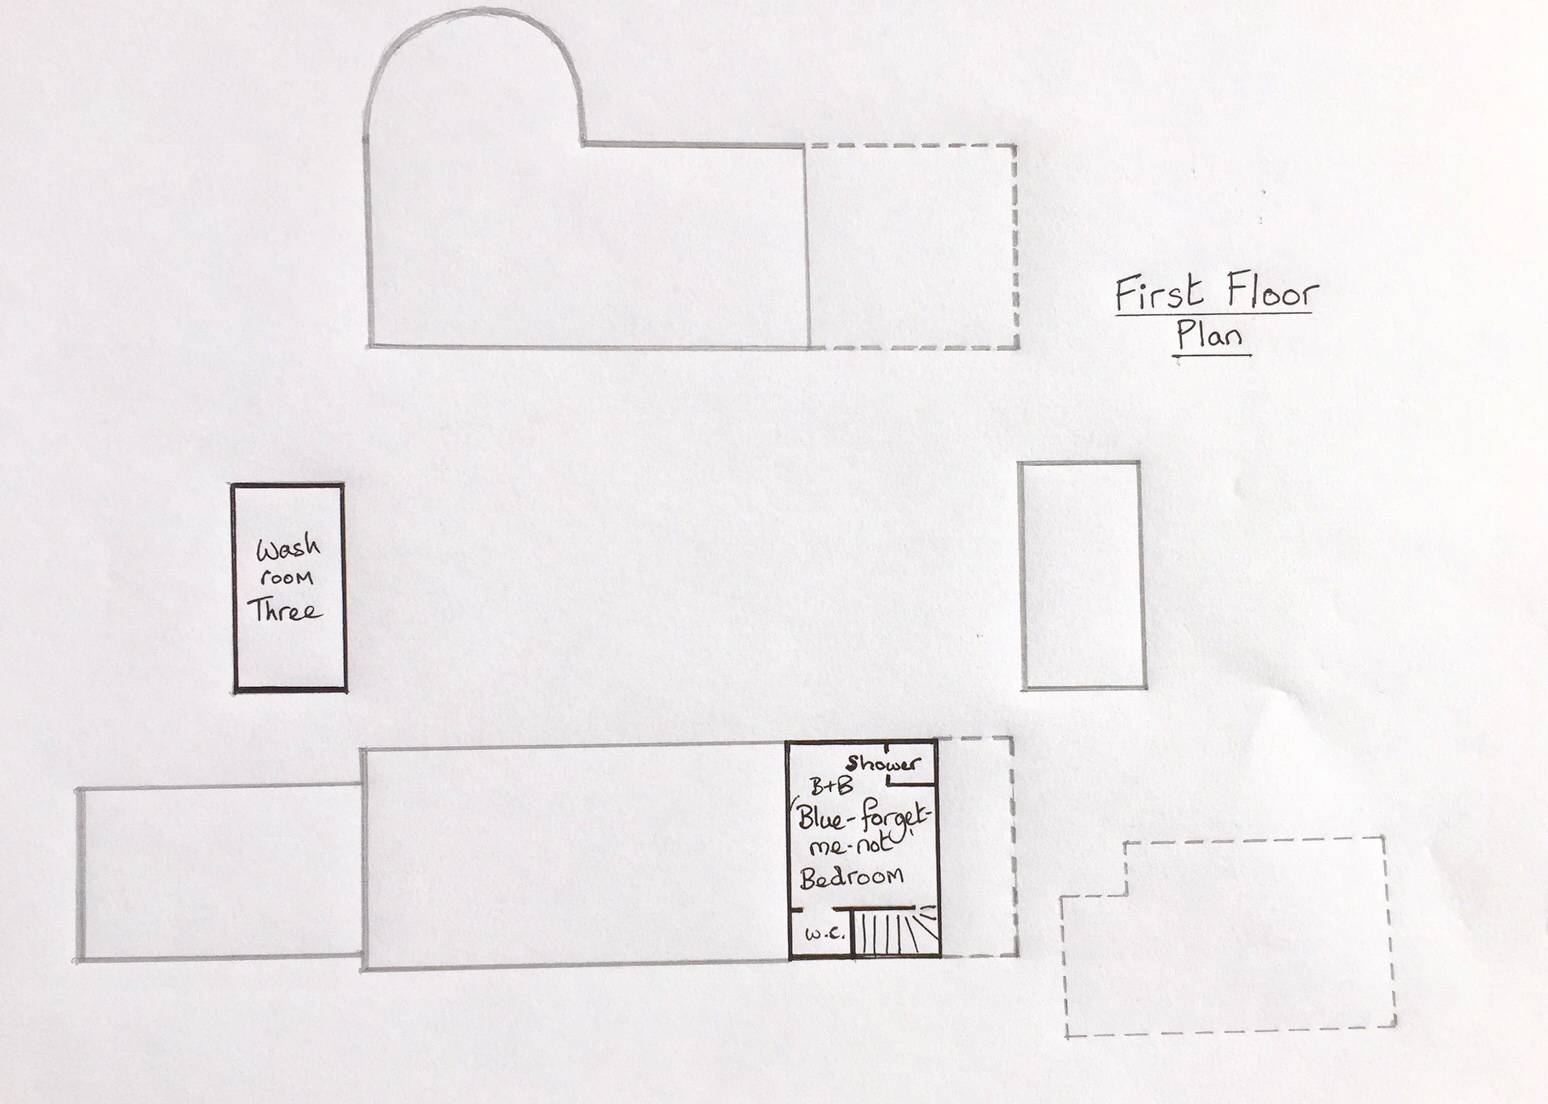 First floor room layout at Huxtable Farm B&B